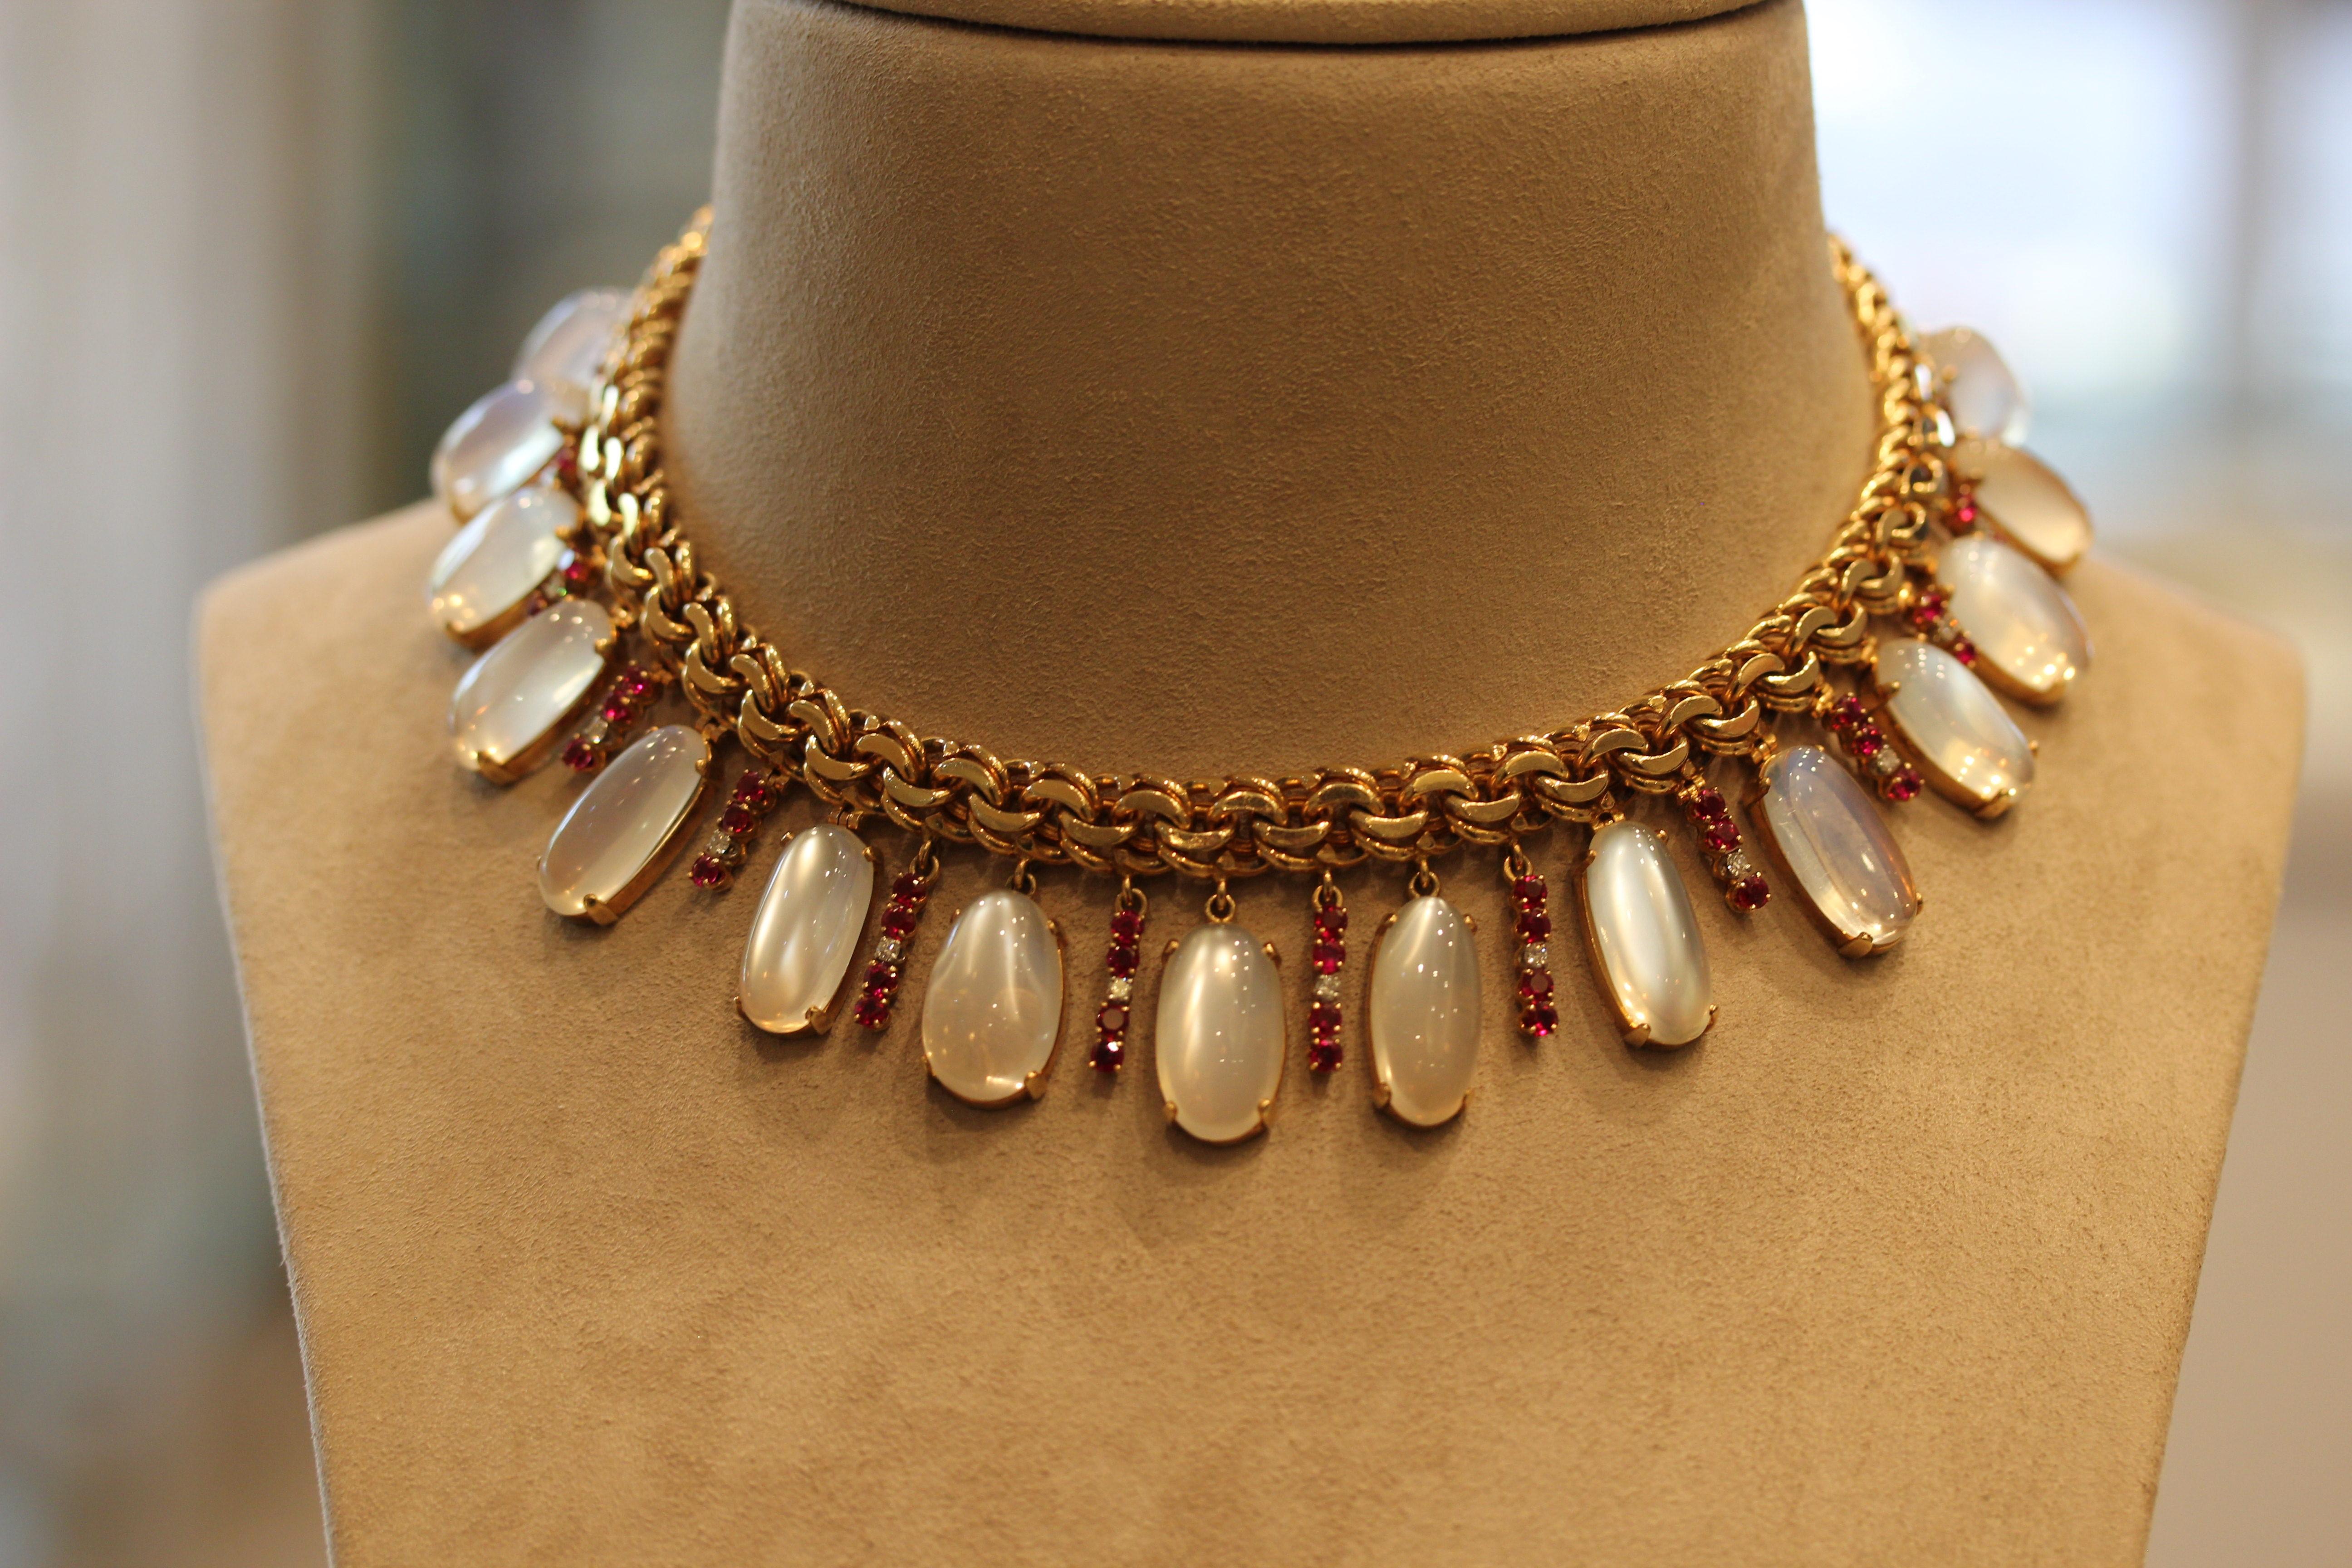 vintage 21k gold blood ruby pendant necklace